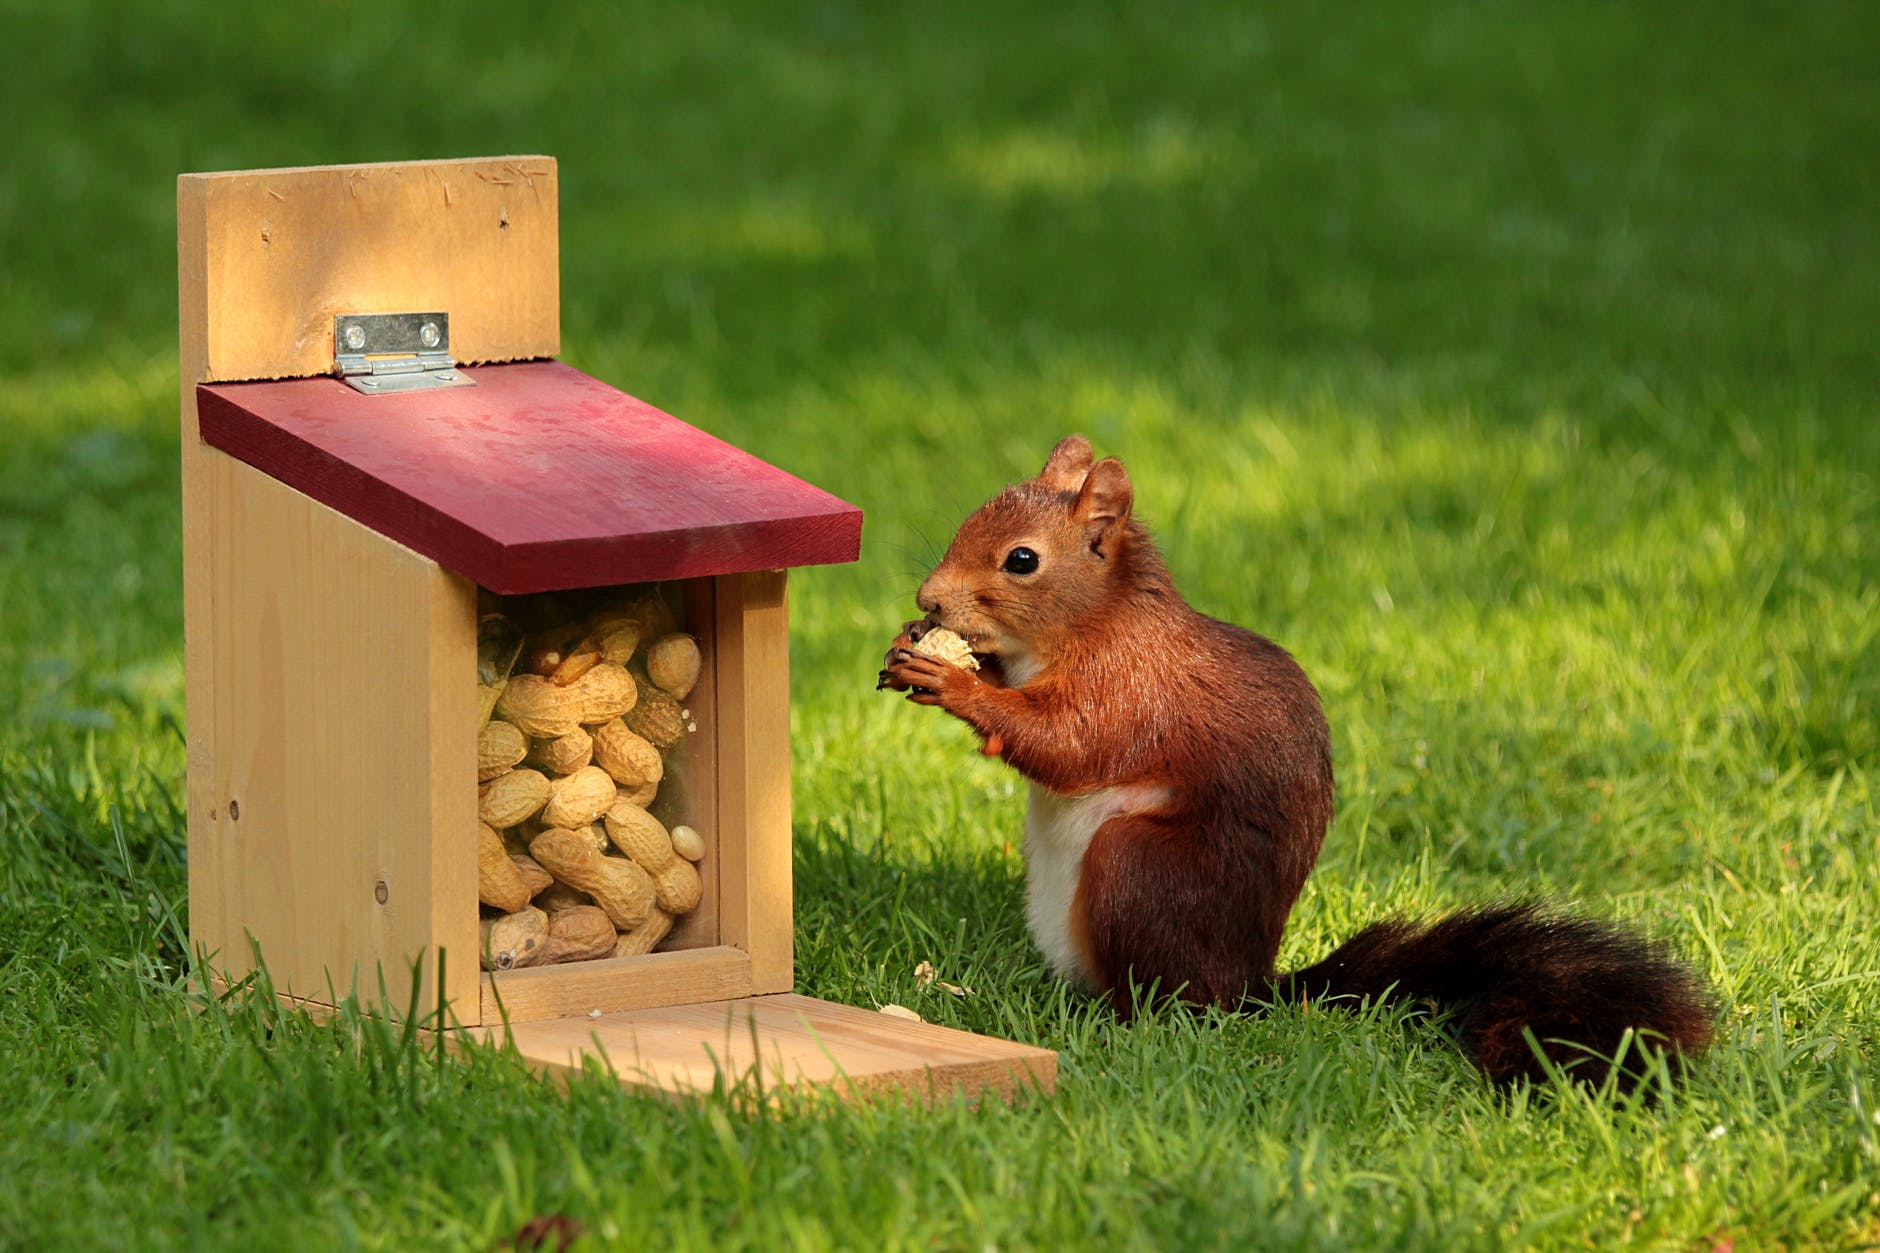 A squirrel eating a peanut